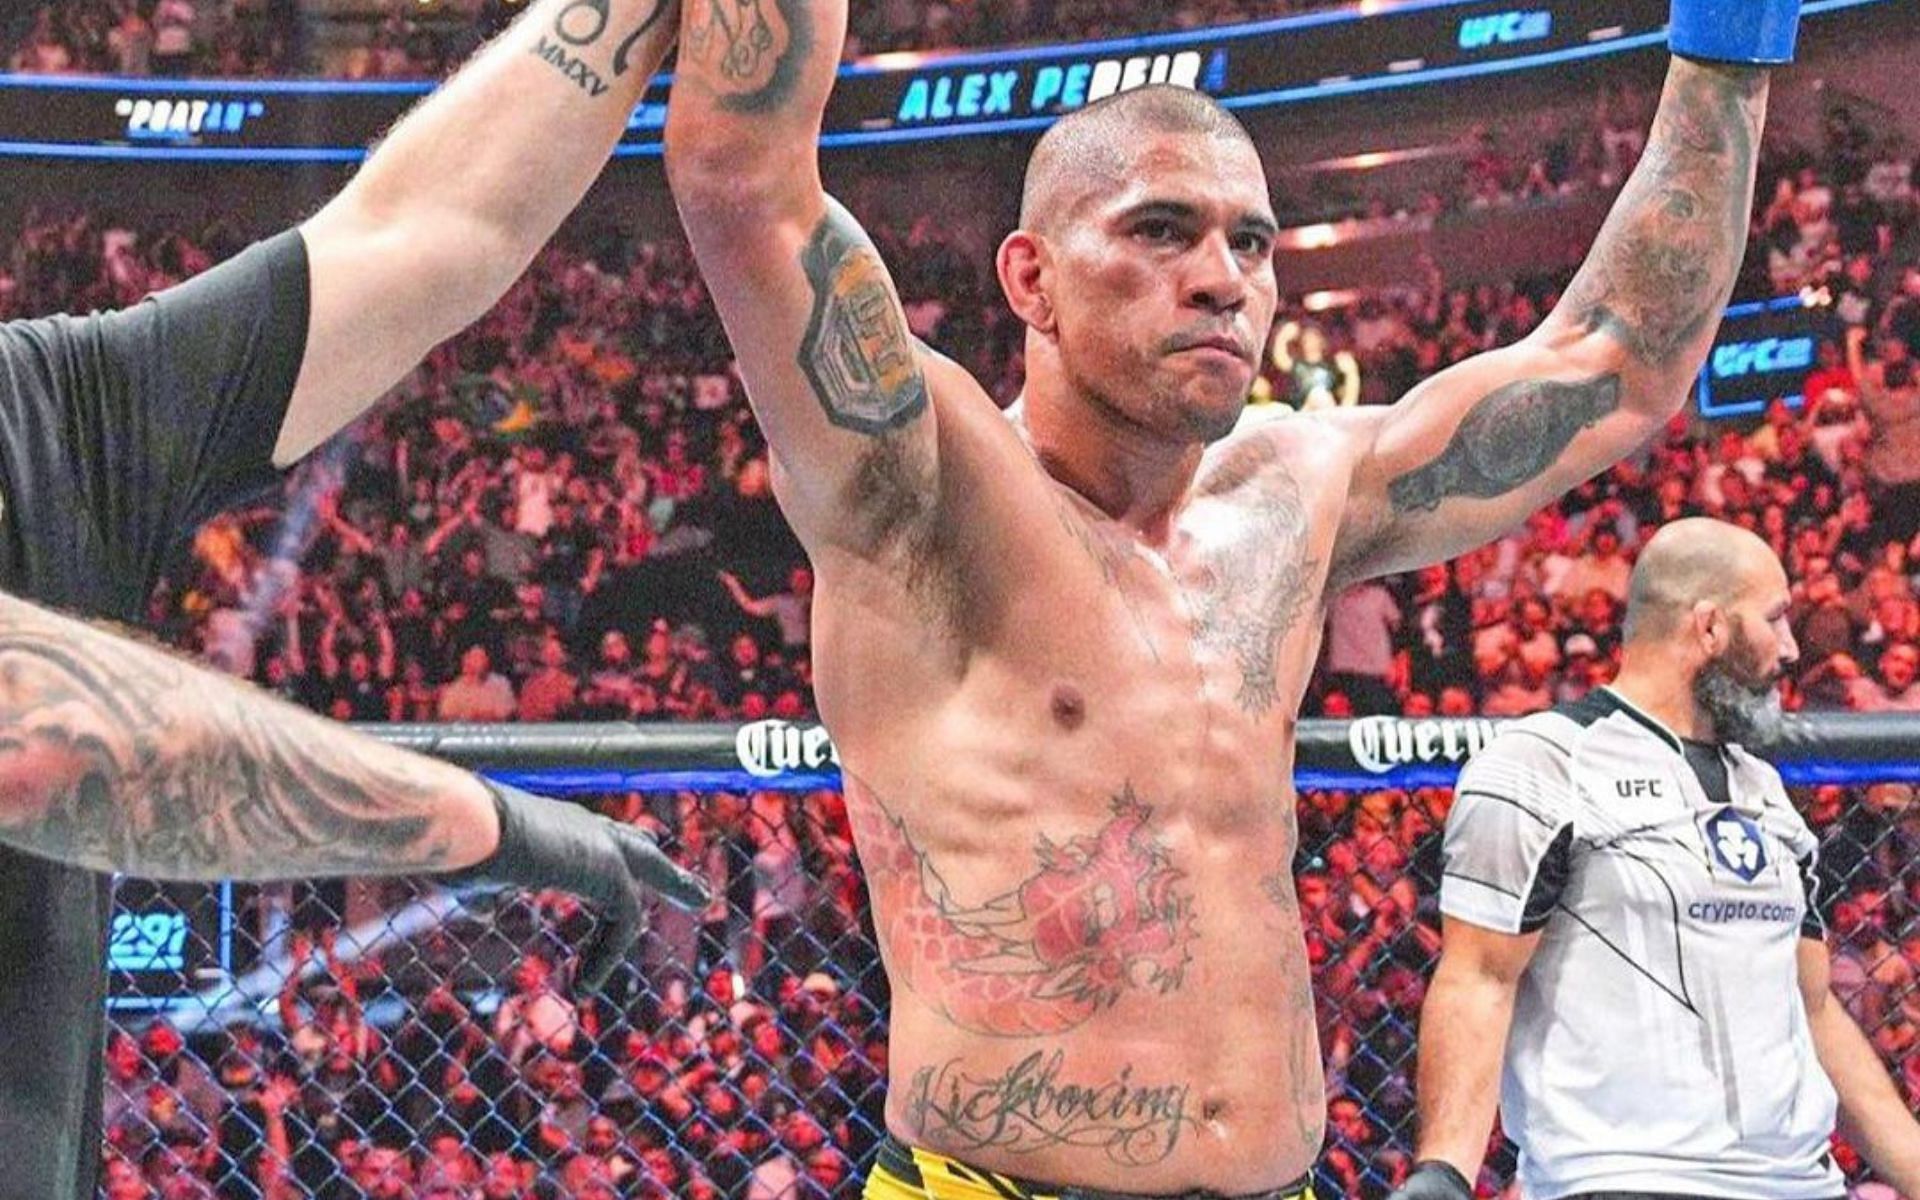 UFC fighter Alex Pereira [Image credits: @alexpoatanpereira on Instagram]